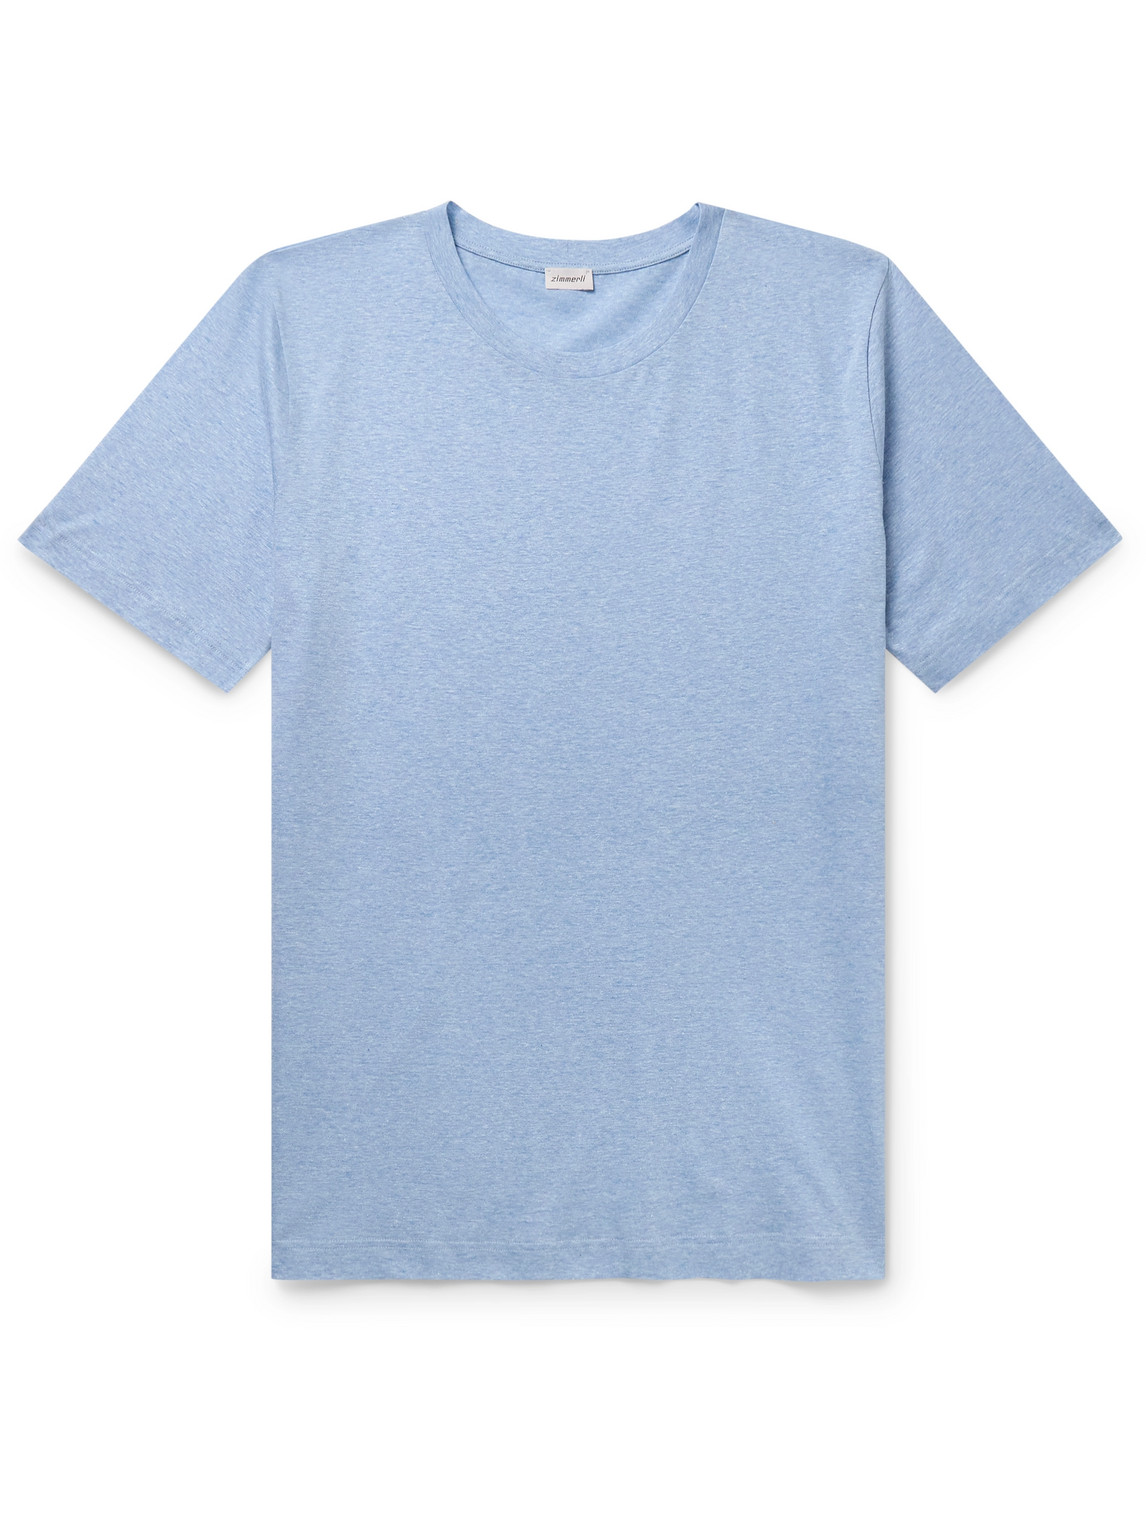 Zimmerli - Filo di Scozia Cotton and Linen-Blend T-Shirt - Men - Blue - S von Zimmerli